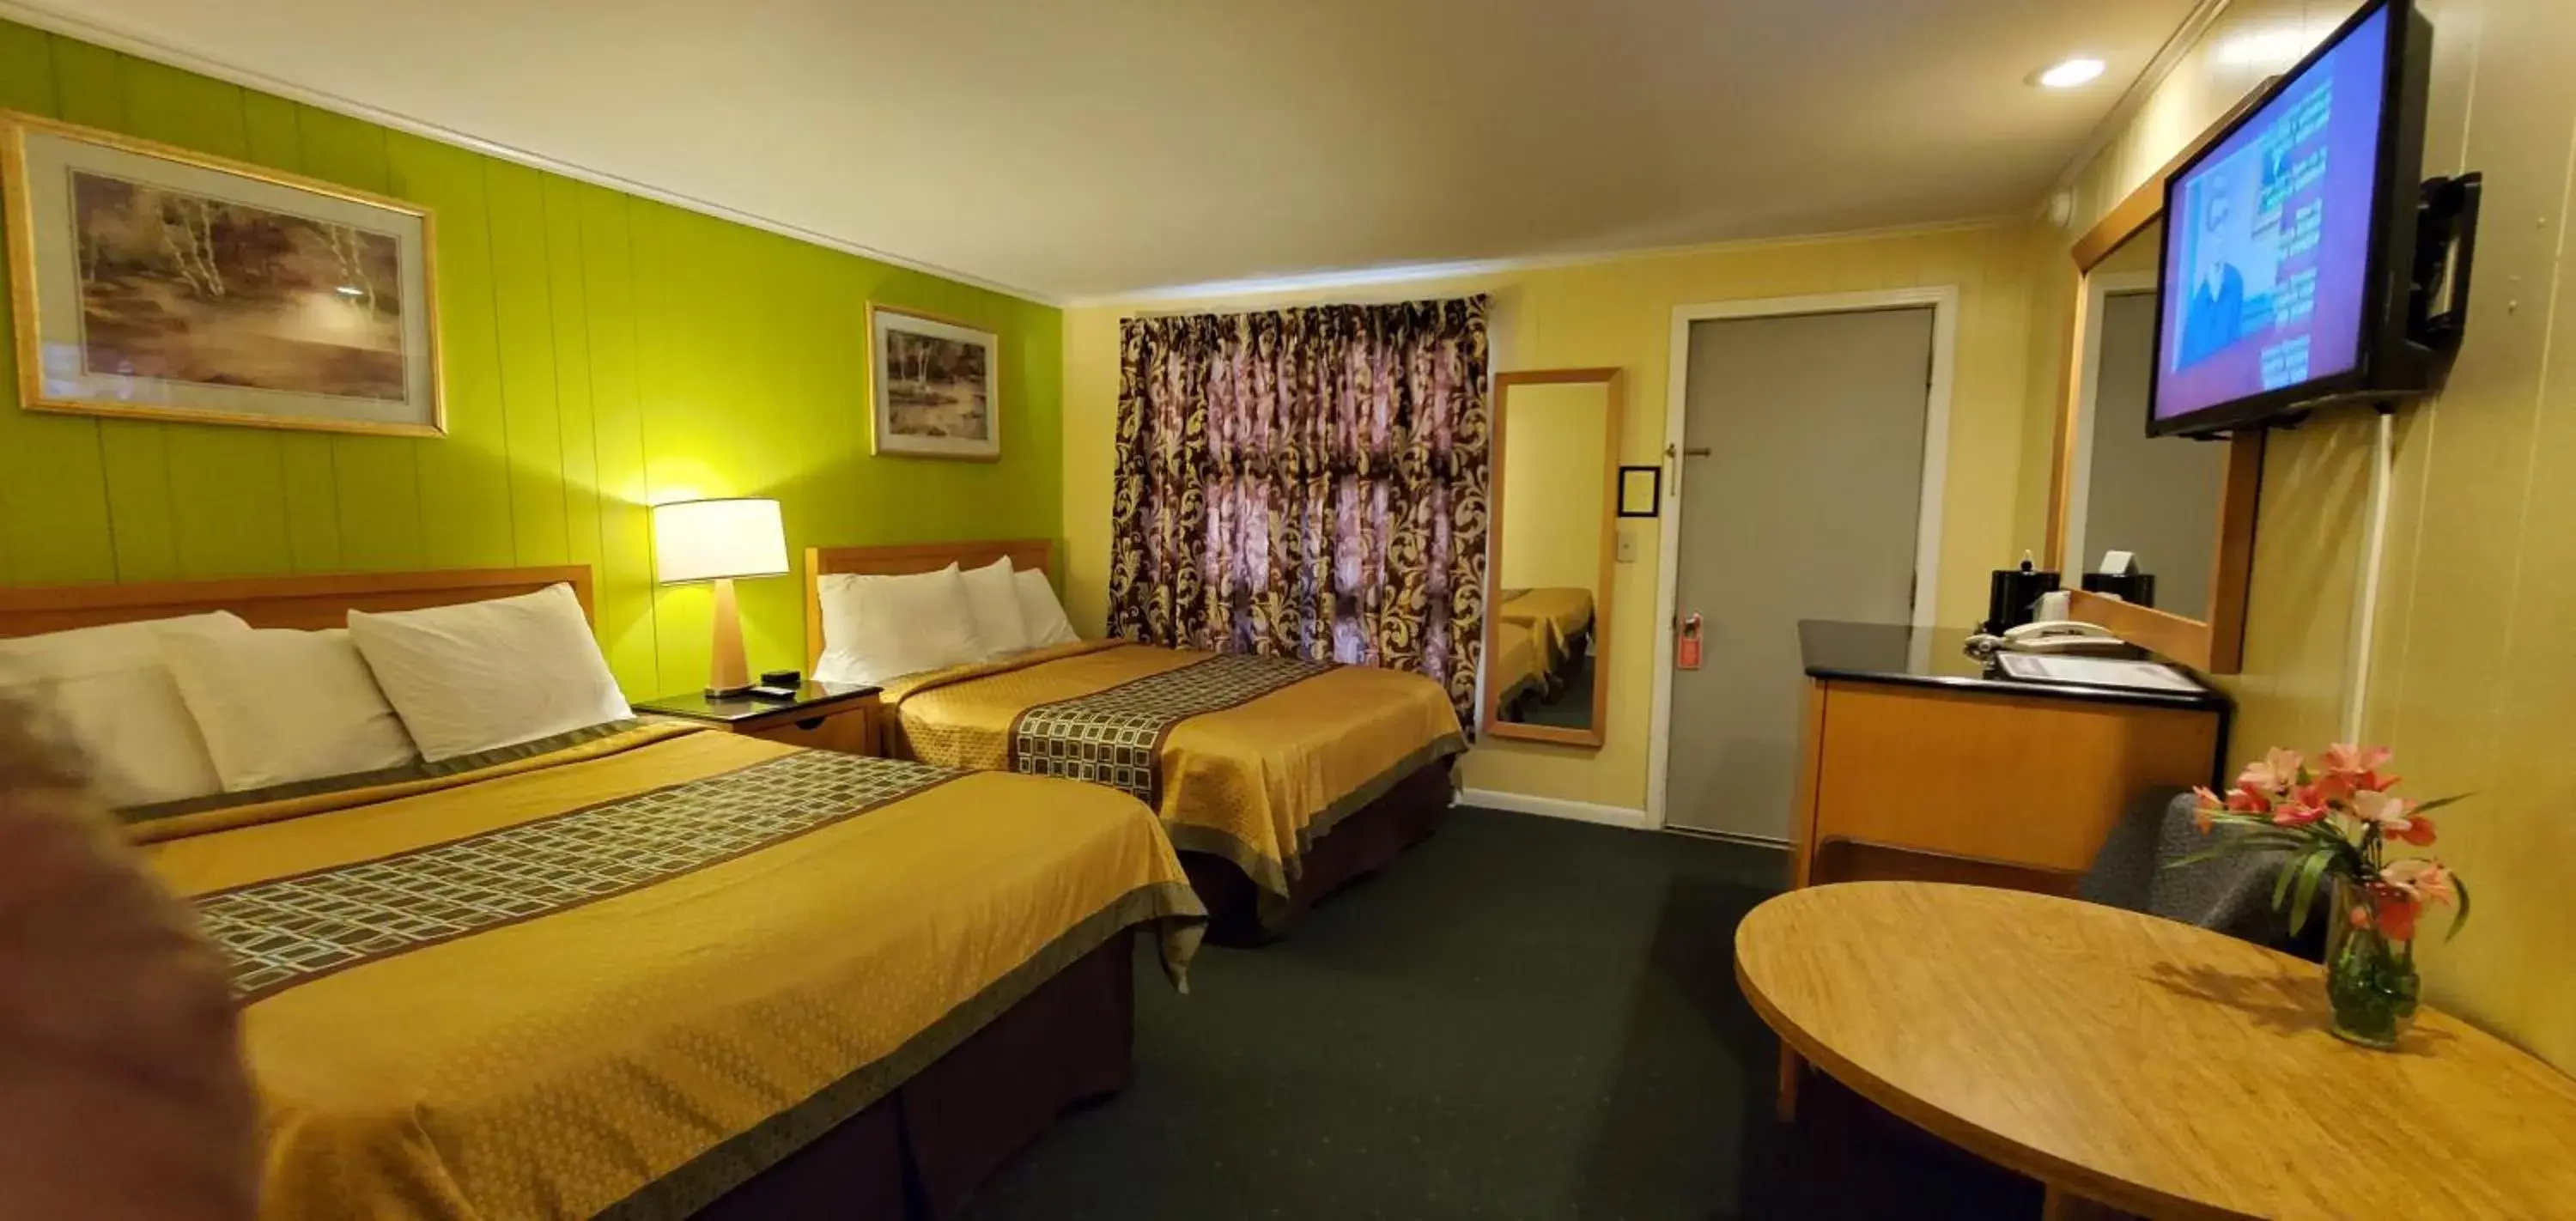 Queen Room with Two Queen Beds in Pinebrook Motel